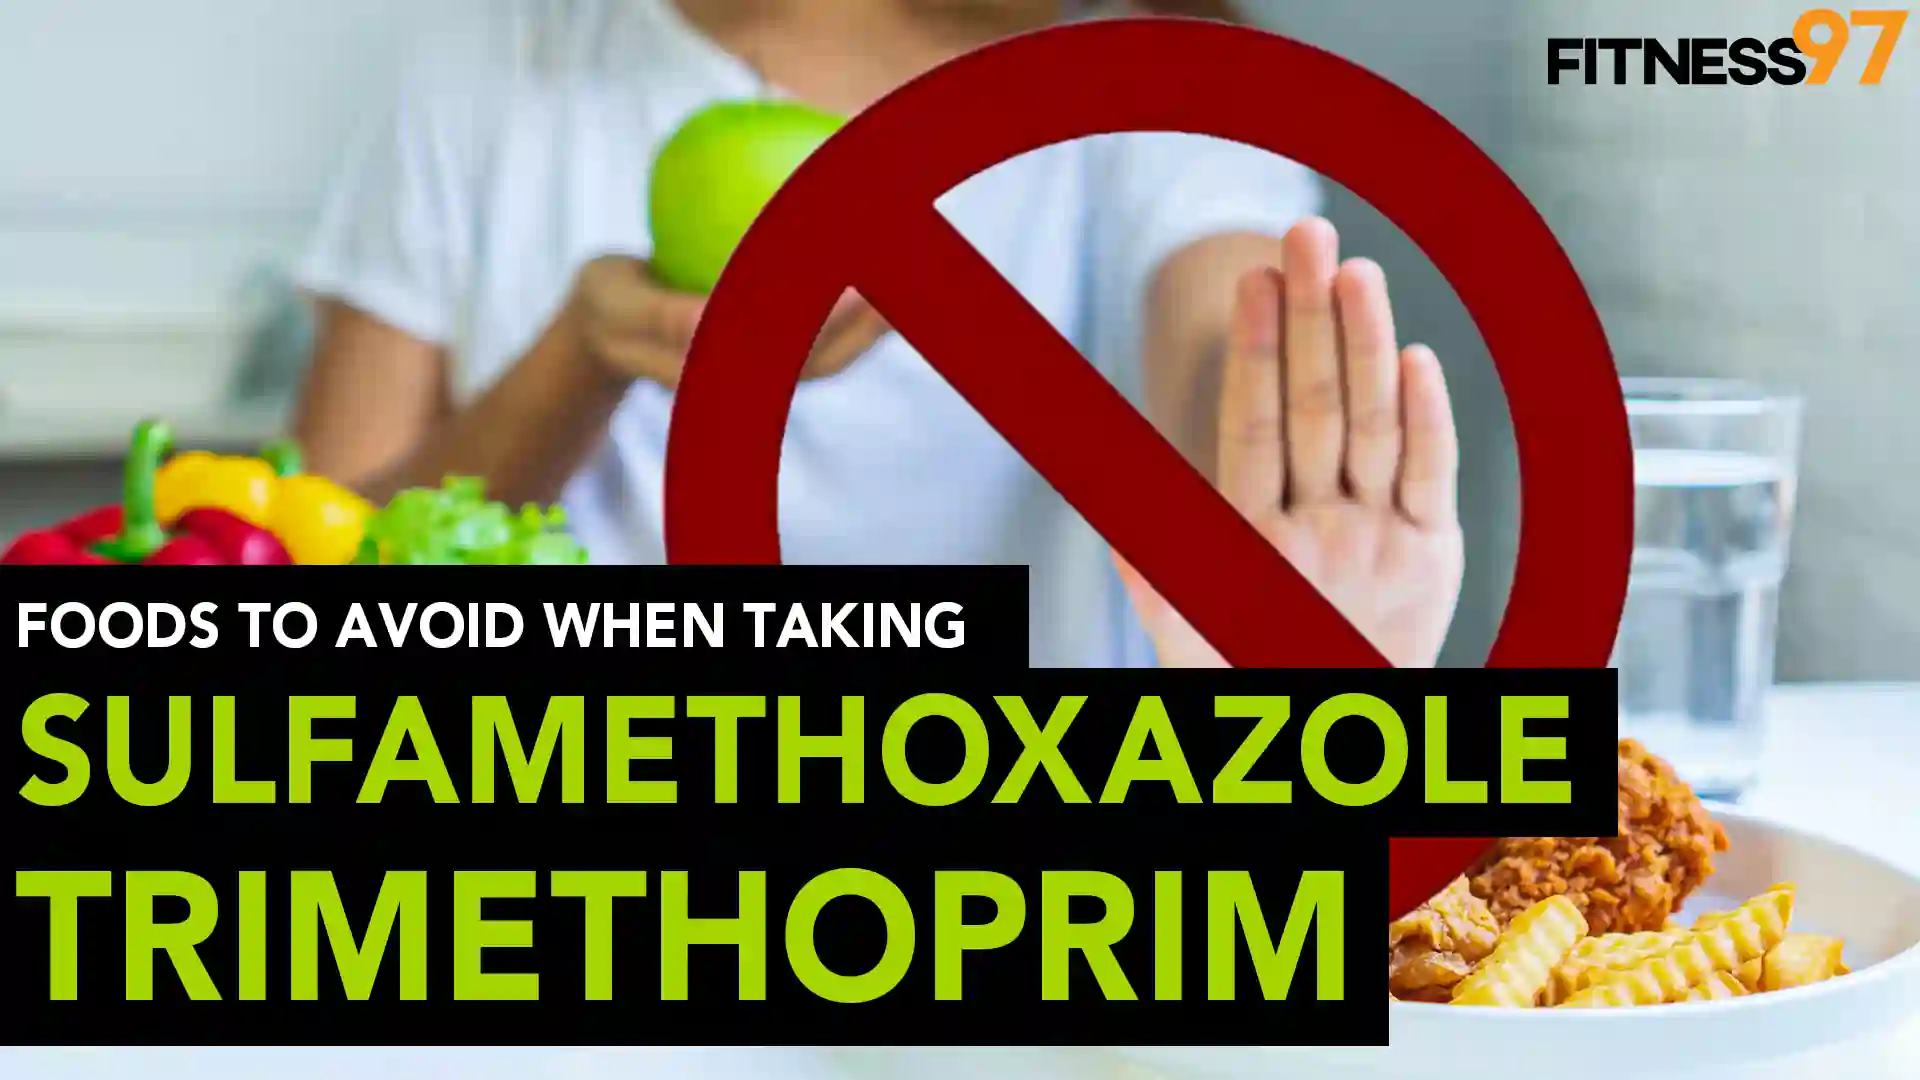 Foods to avoid when taking sulfamethoxazole / trimethoprim